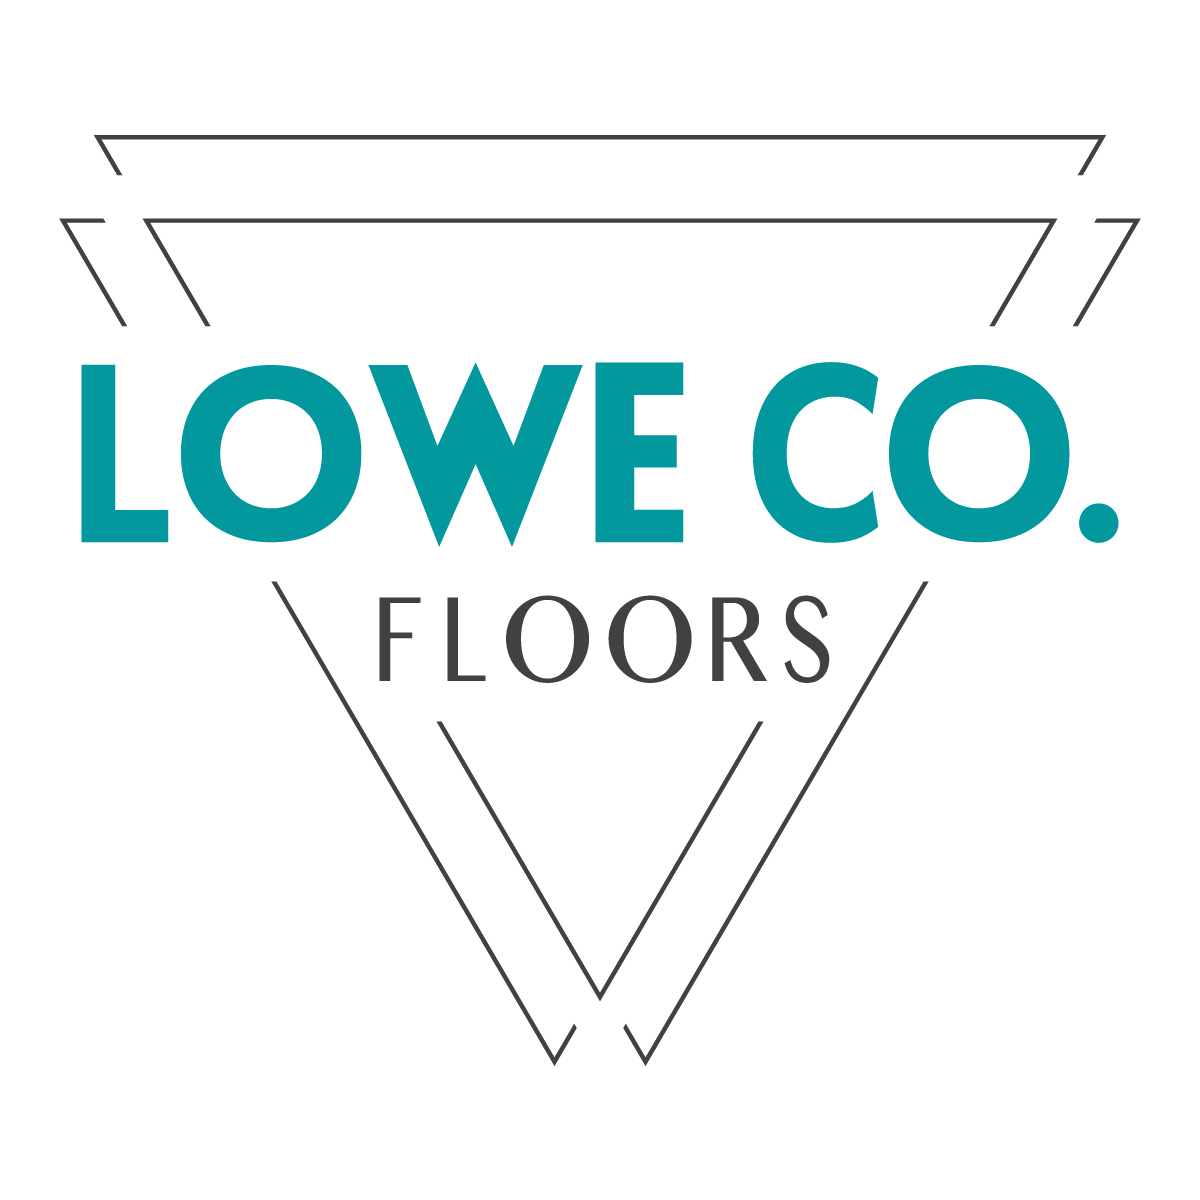 Lowe Co. Floors